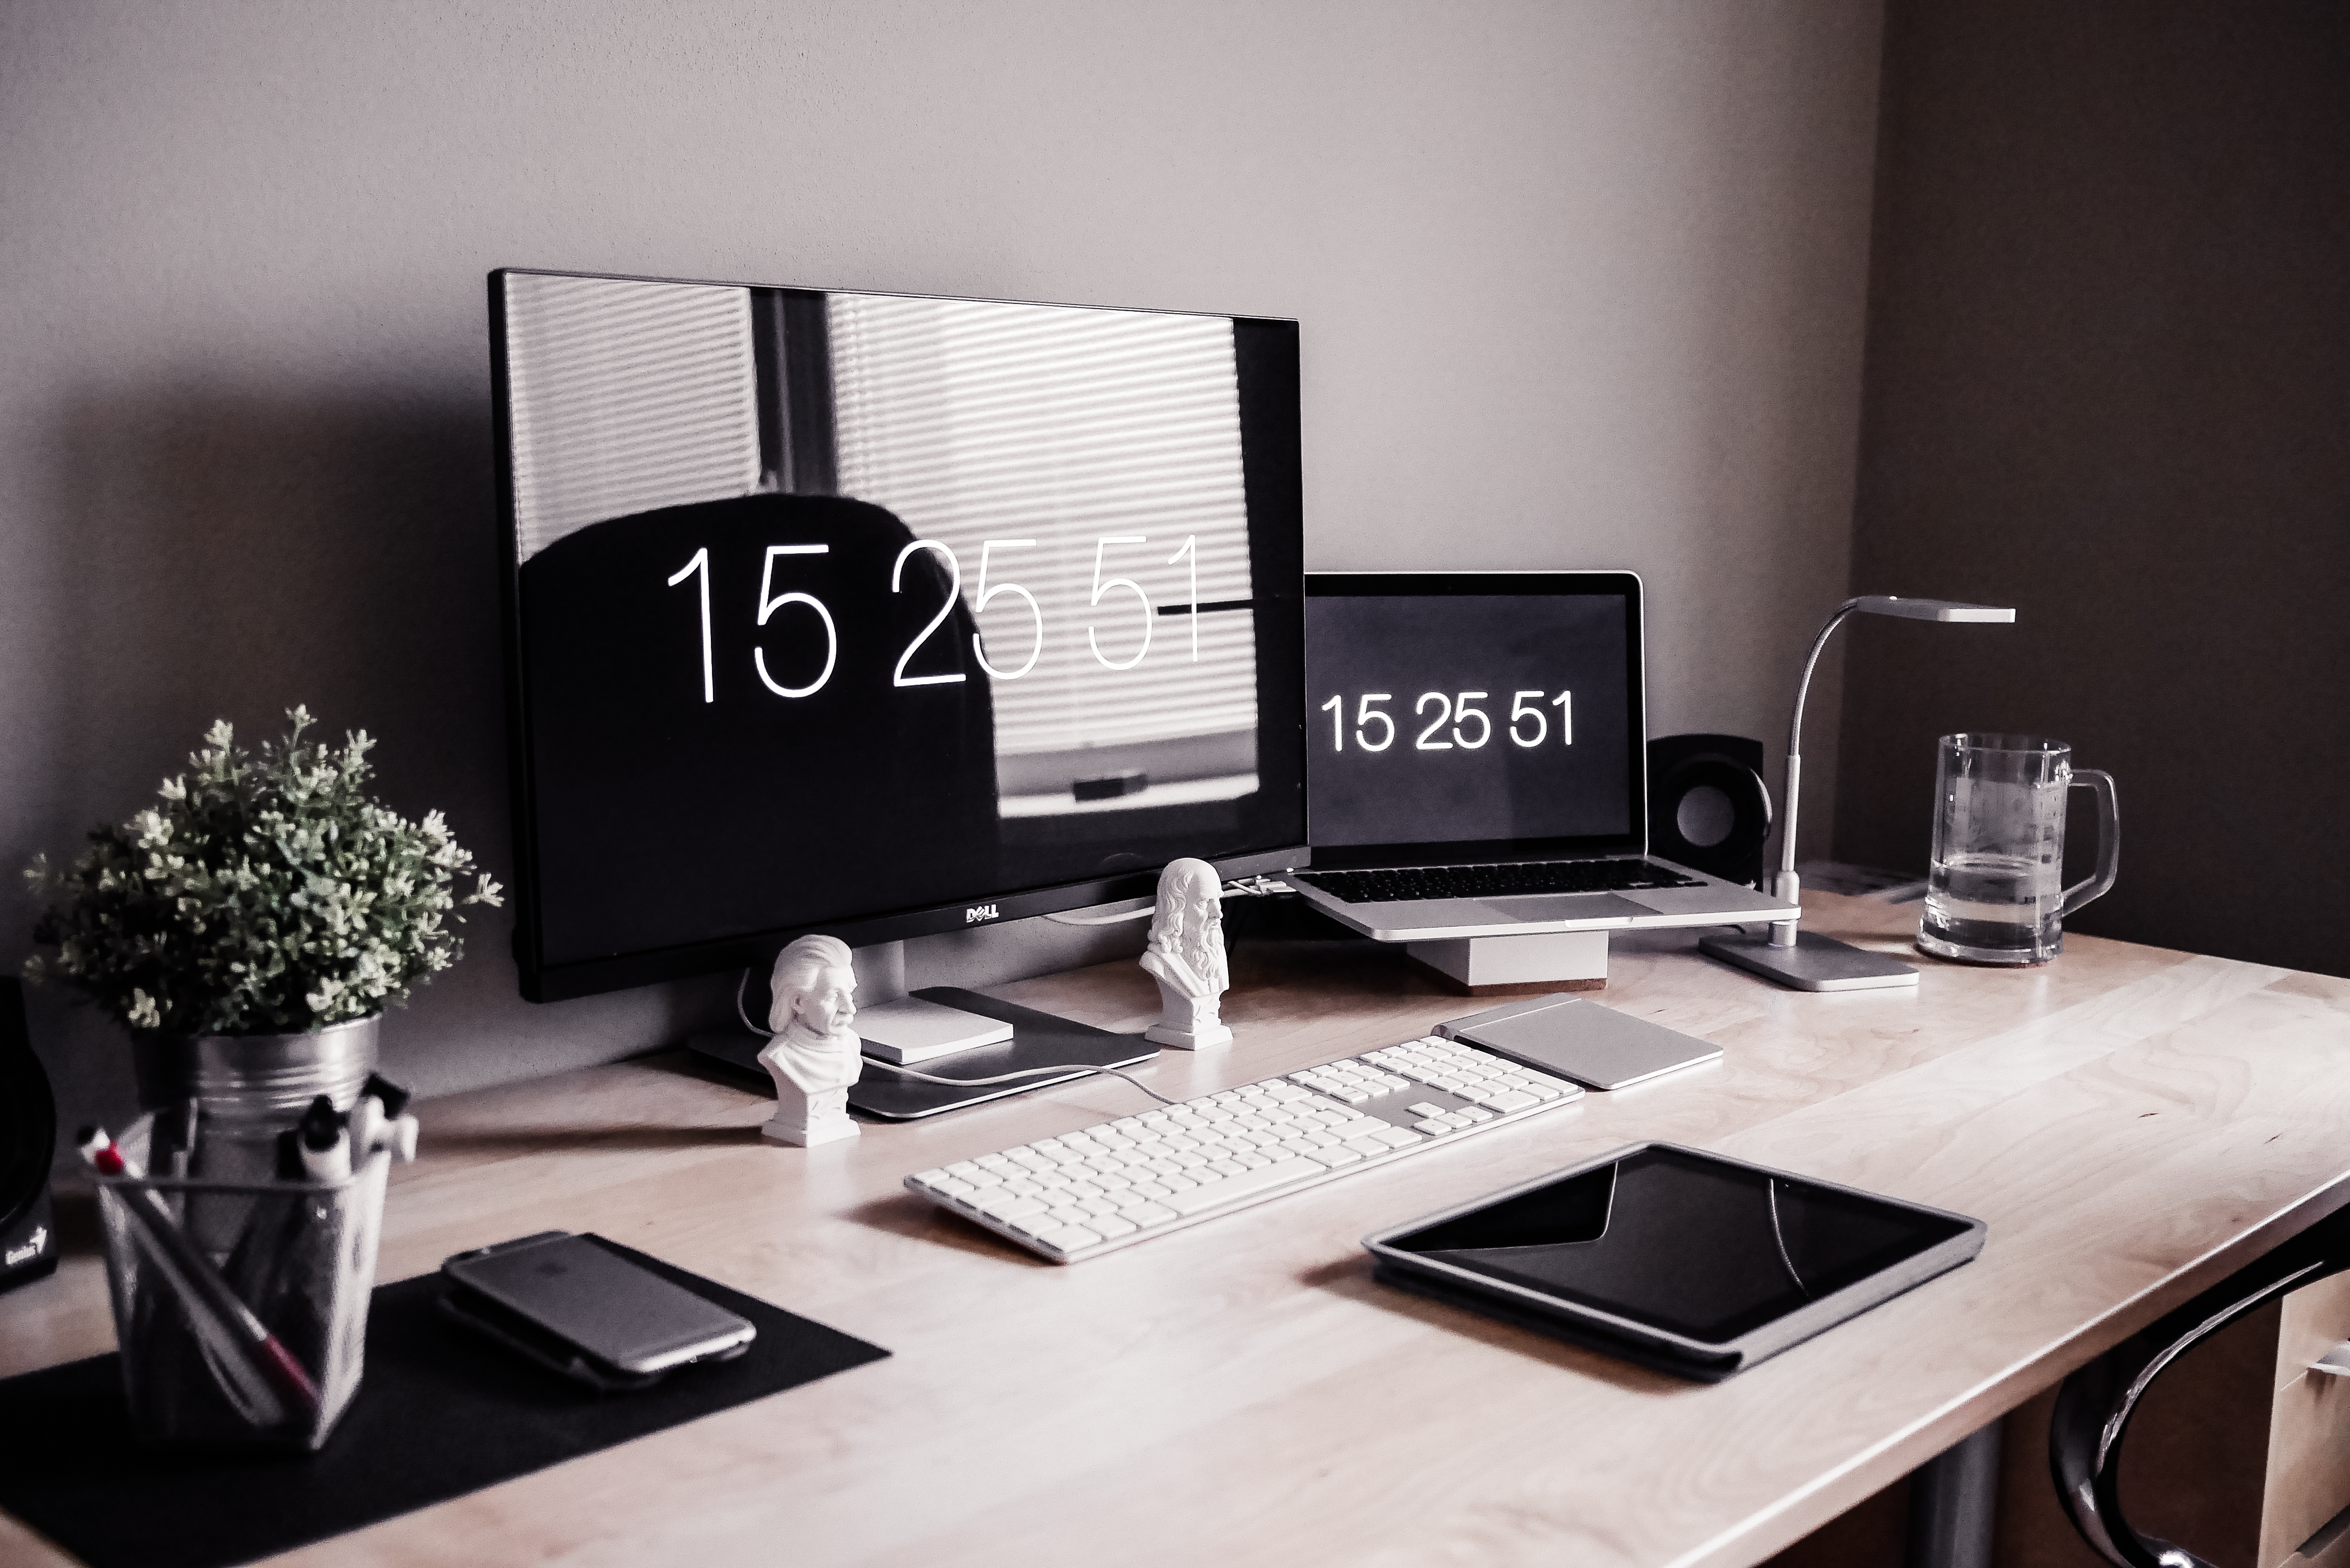 https://picjumbo.com/wp-content/uploads/minimalist-home-office-workspace-desk-setup-free-photo.jpg